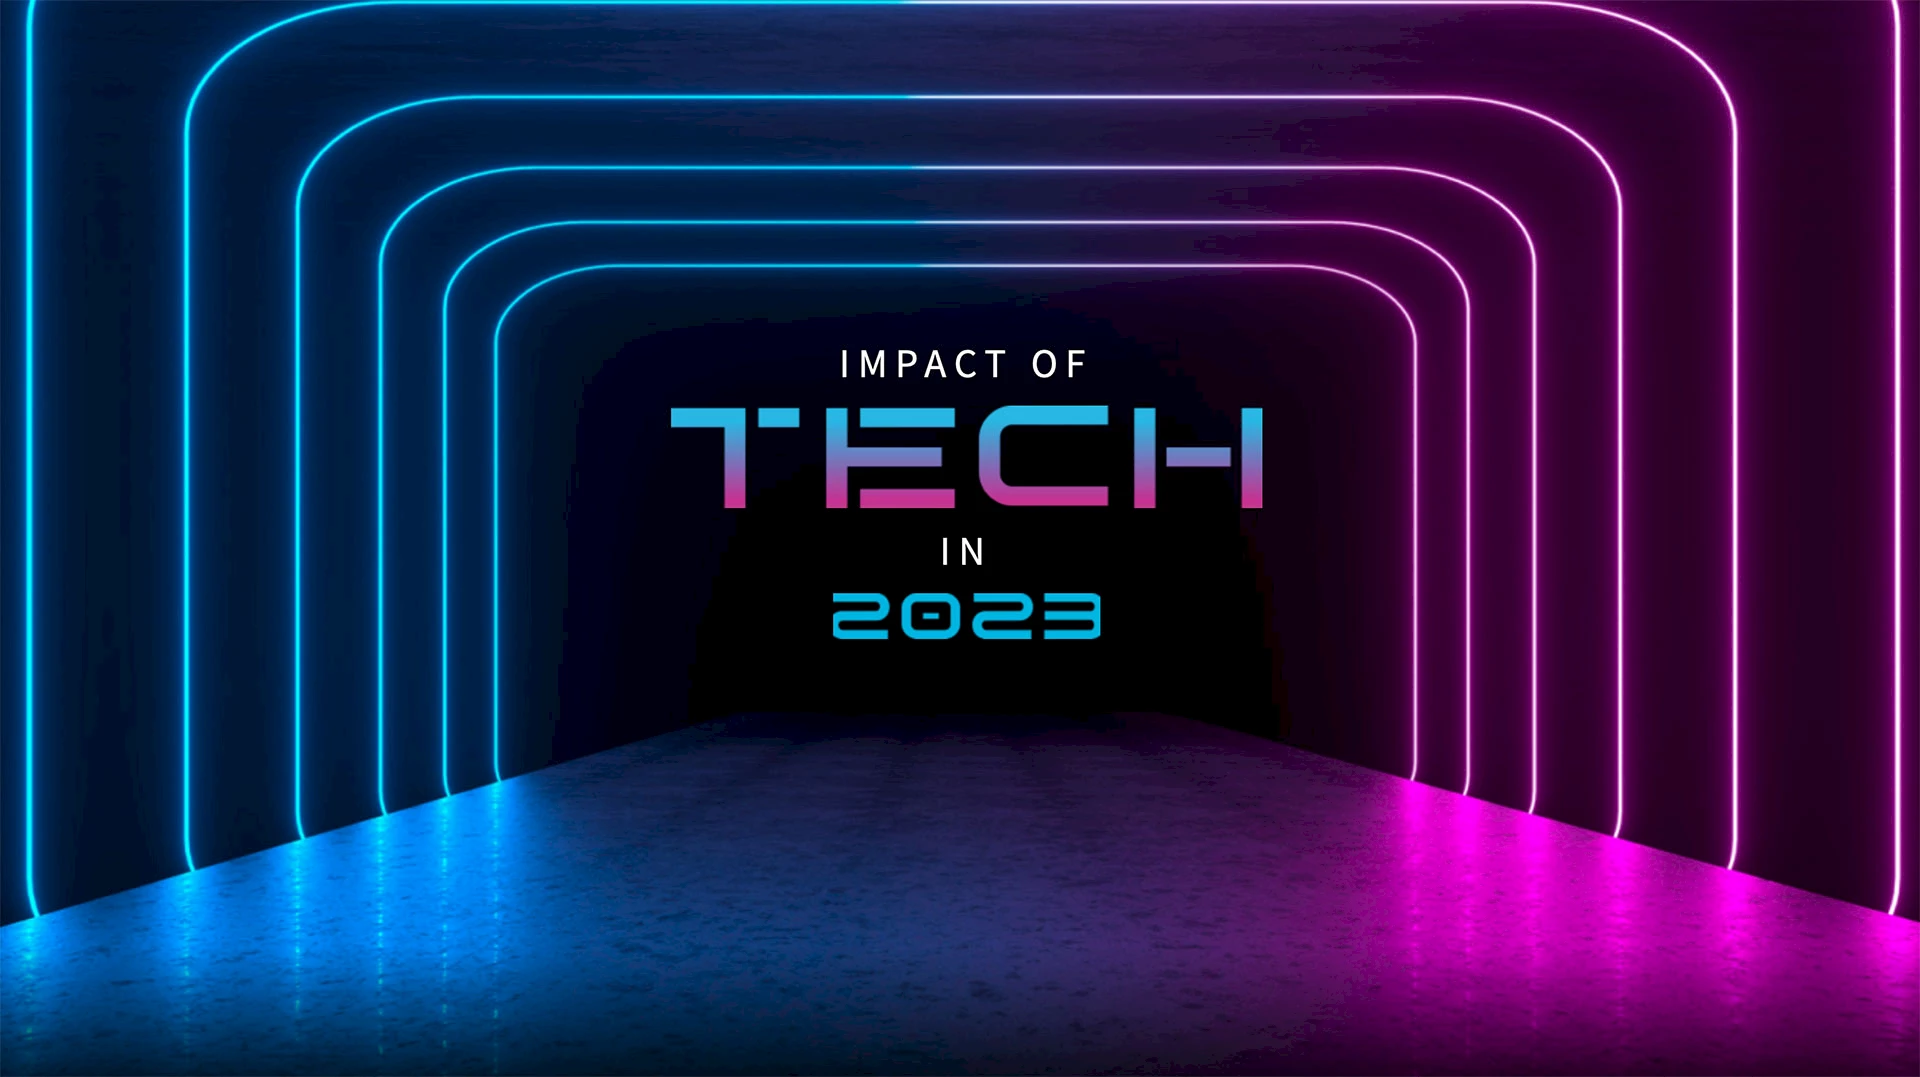 Impact of Tech in 2023.